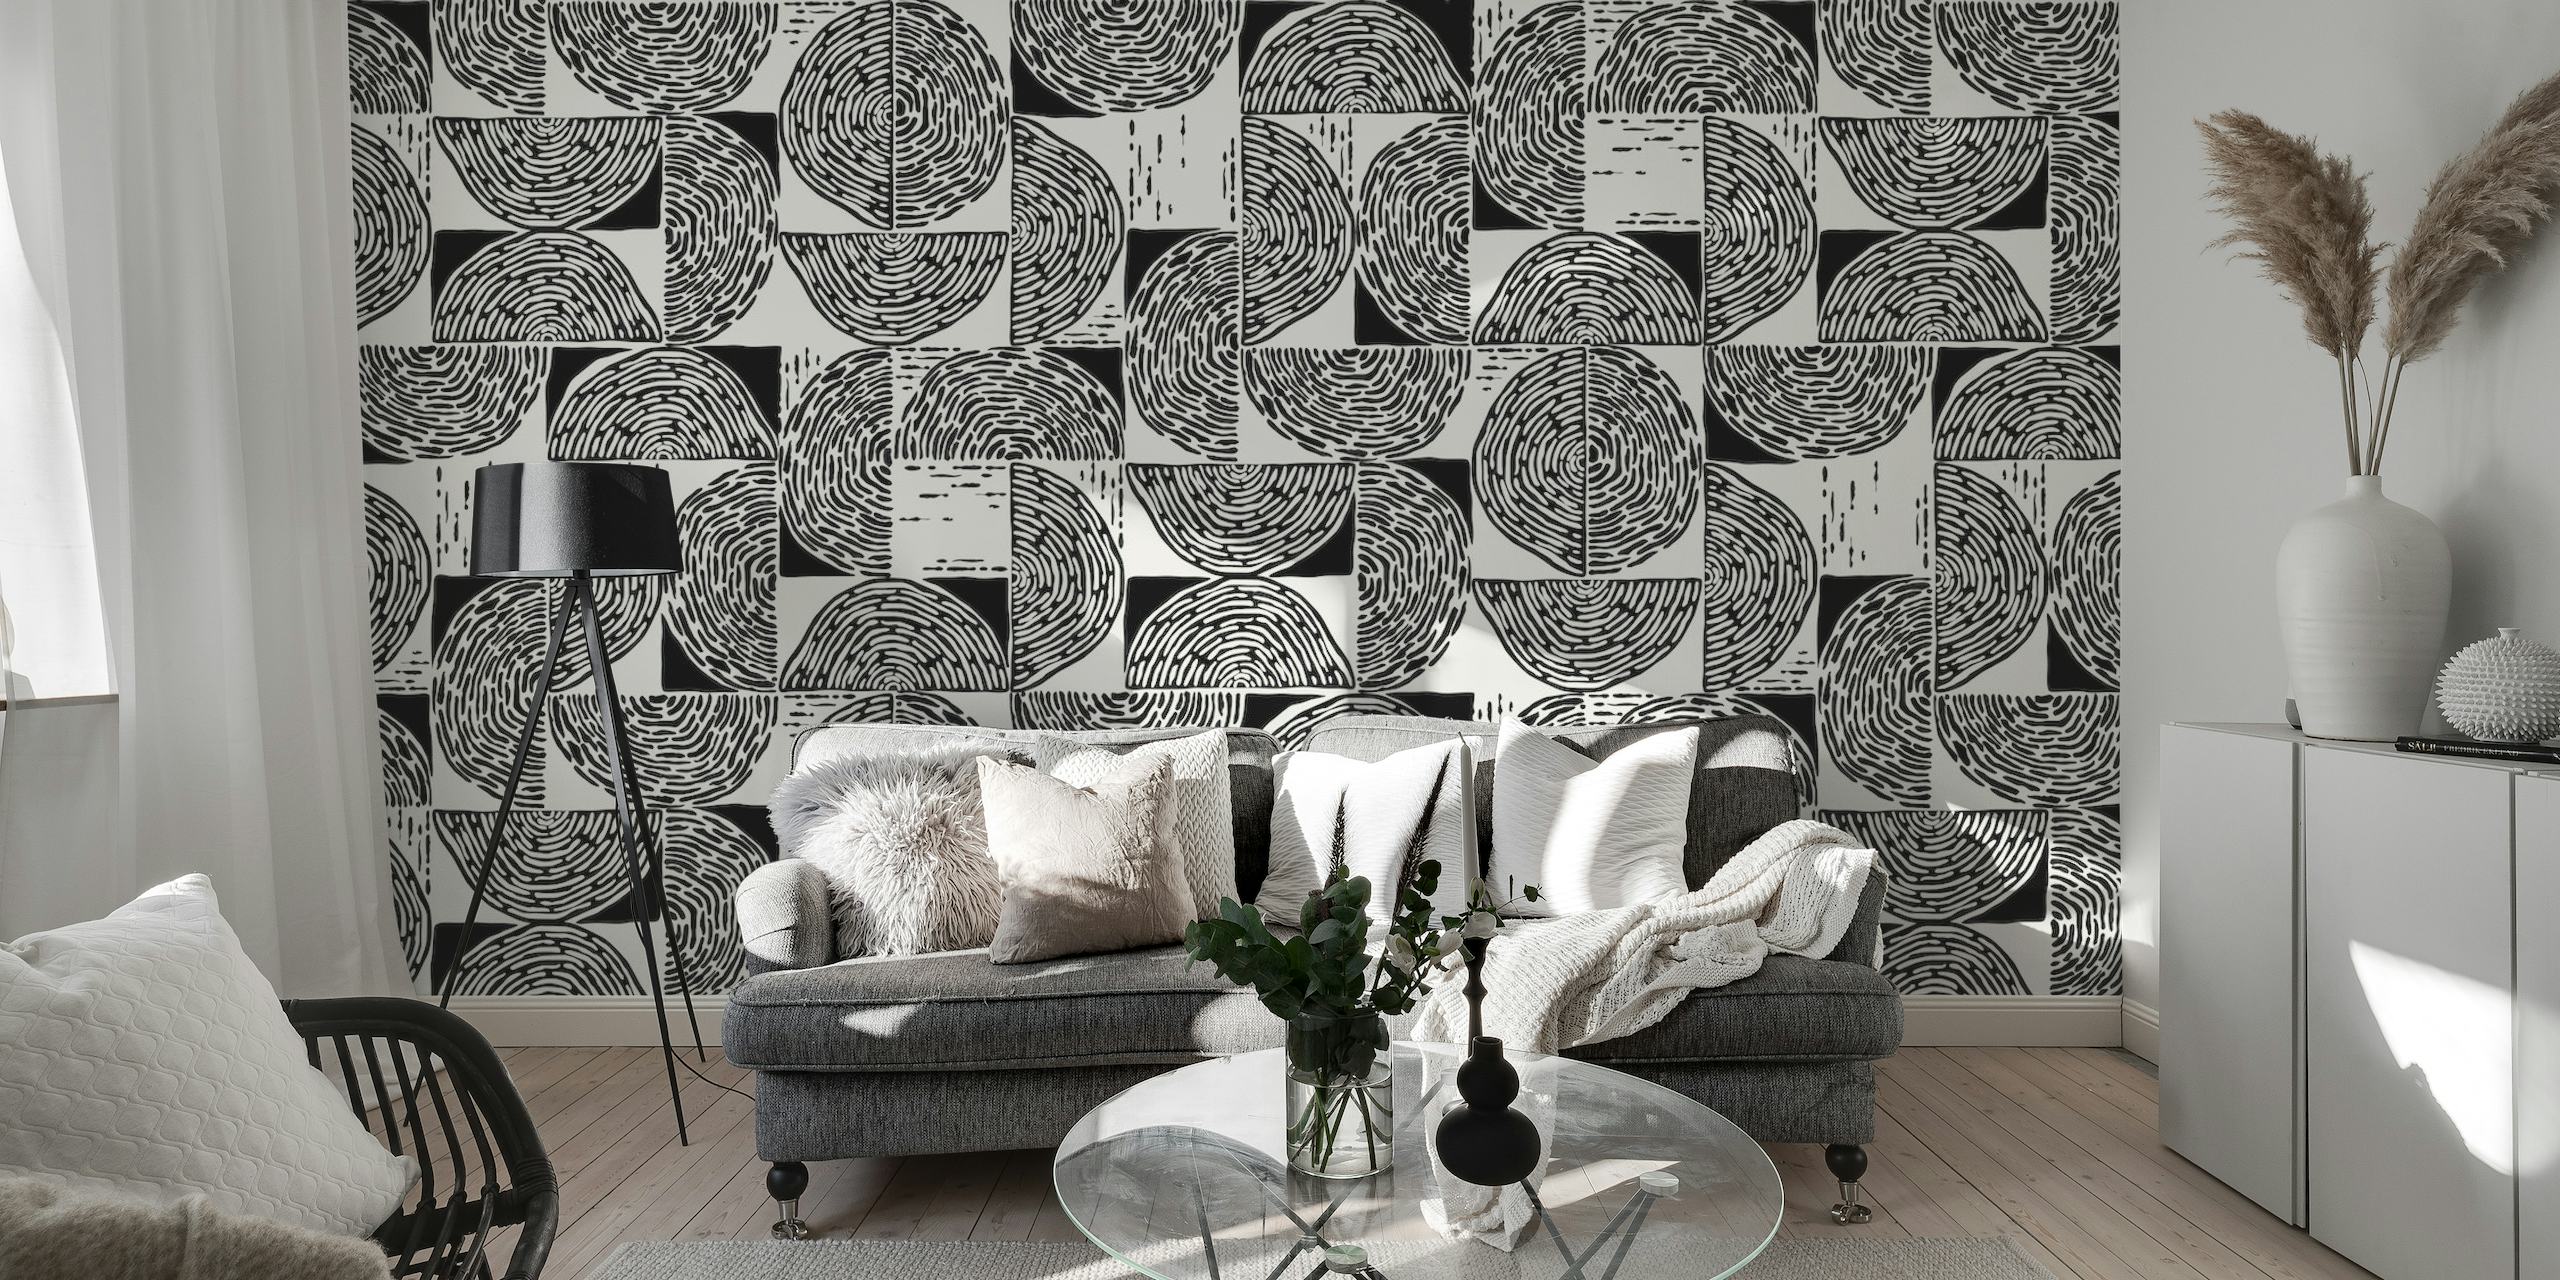 Black and white wood block print behang